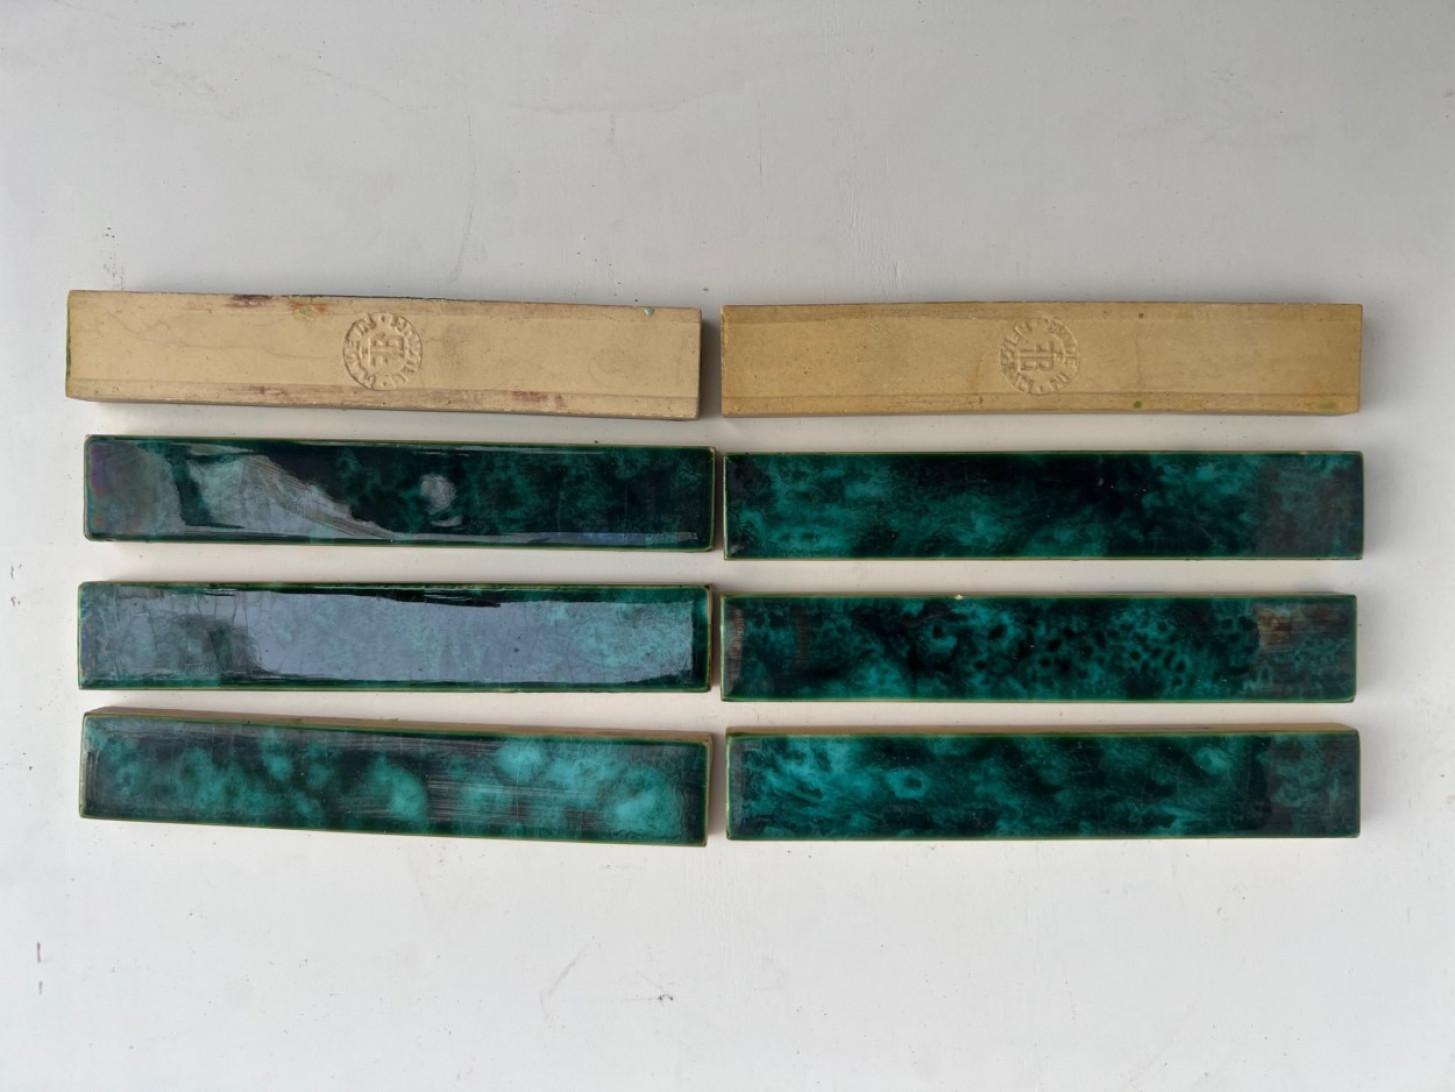 1 of the 45 Green Art Deco Glazed Relief Tiles by Deutsche Steingutfabrik, 1960s For Sale 7